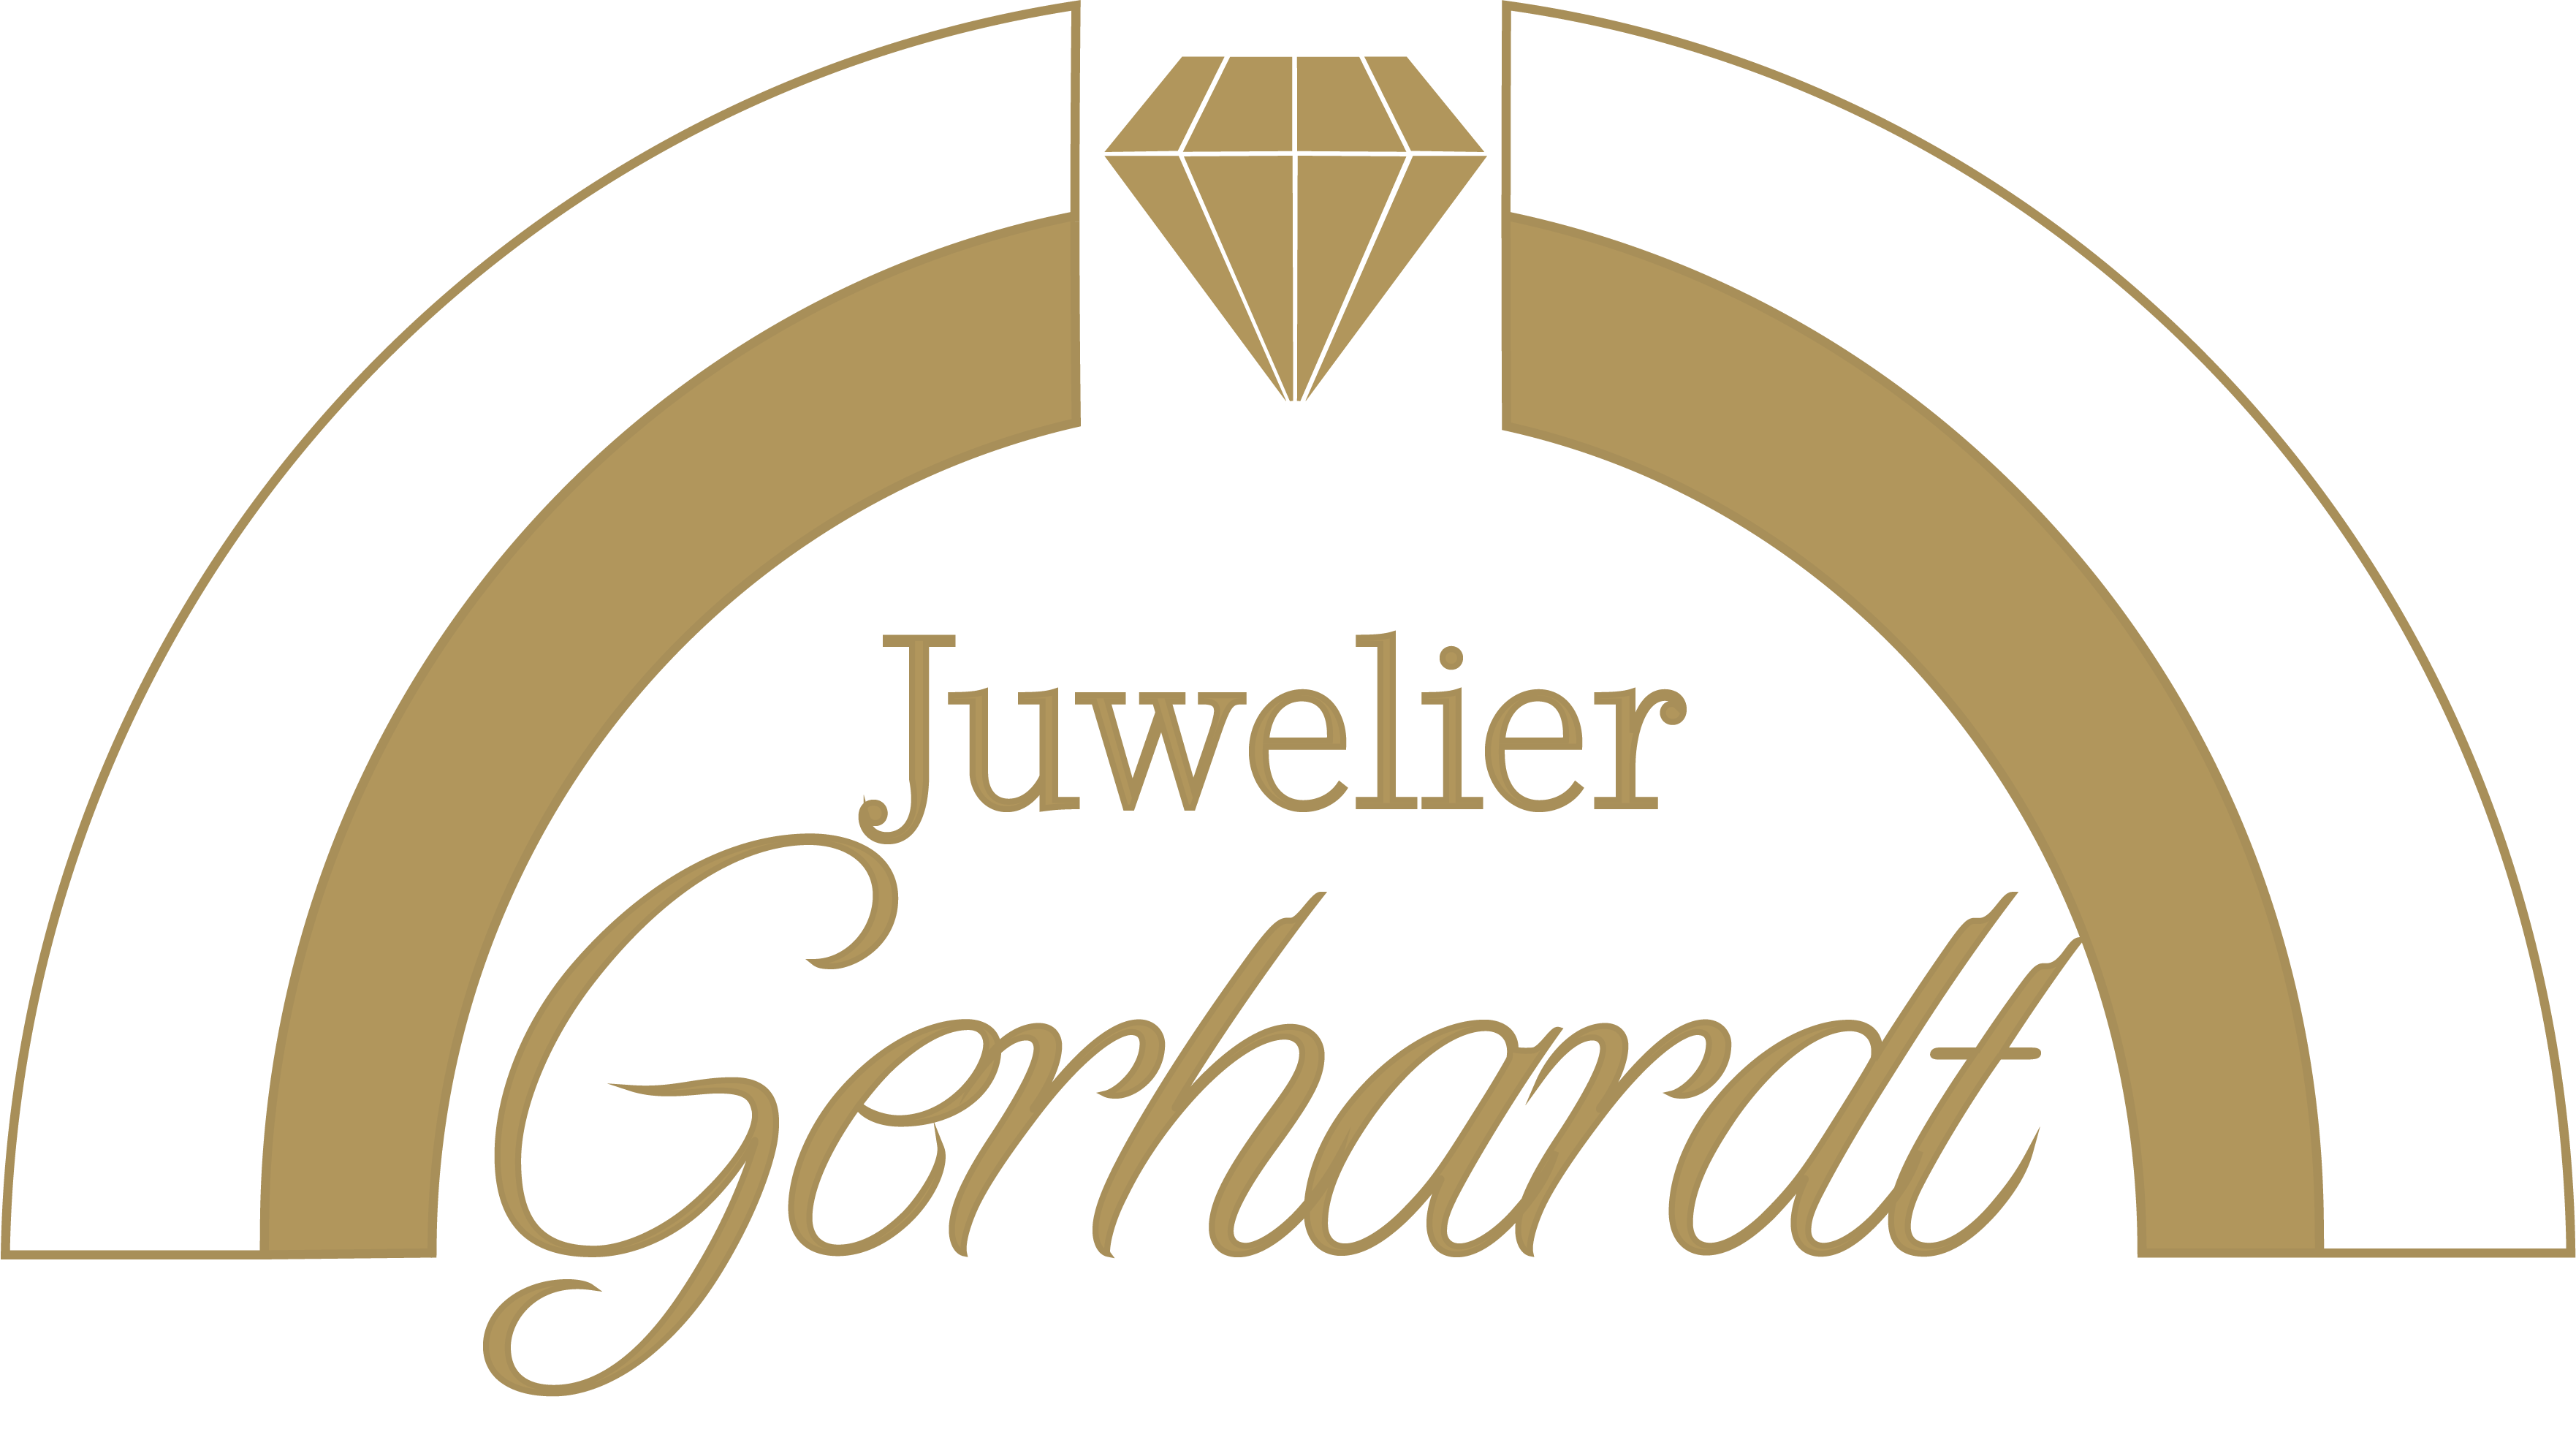 juwelier gerhardt logo